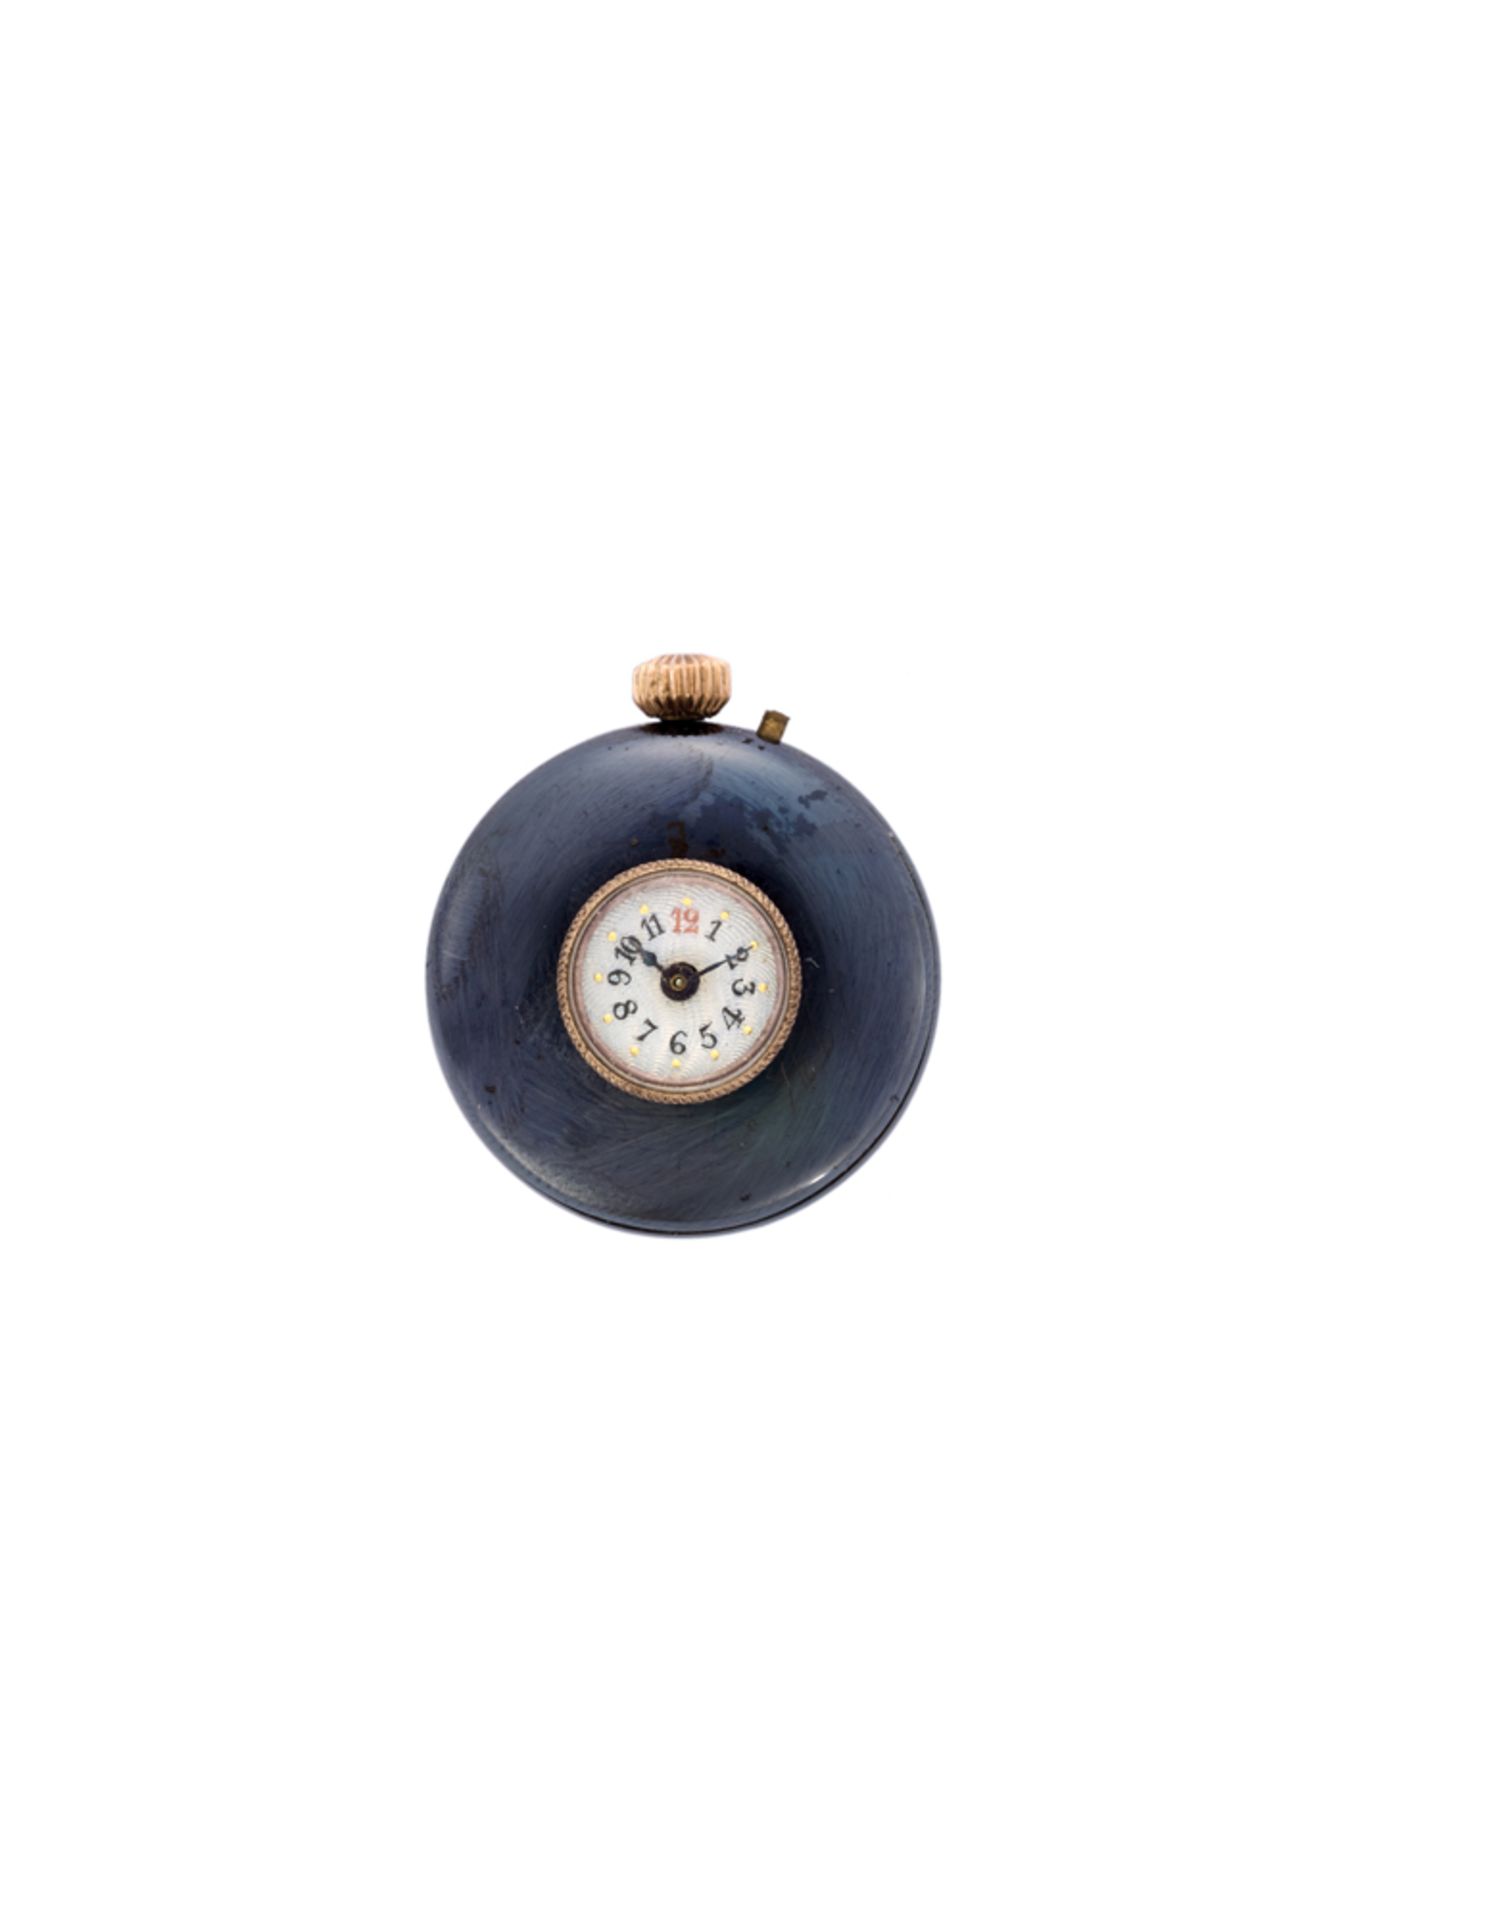 ANONYMOUSMetal buttonhole watch20th centuryManual-wind movementDial with Arabic numeralsDiam. mm